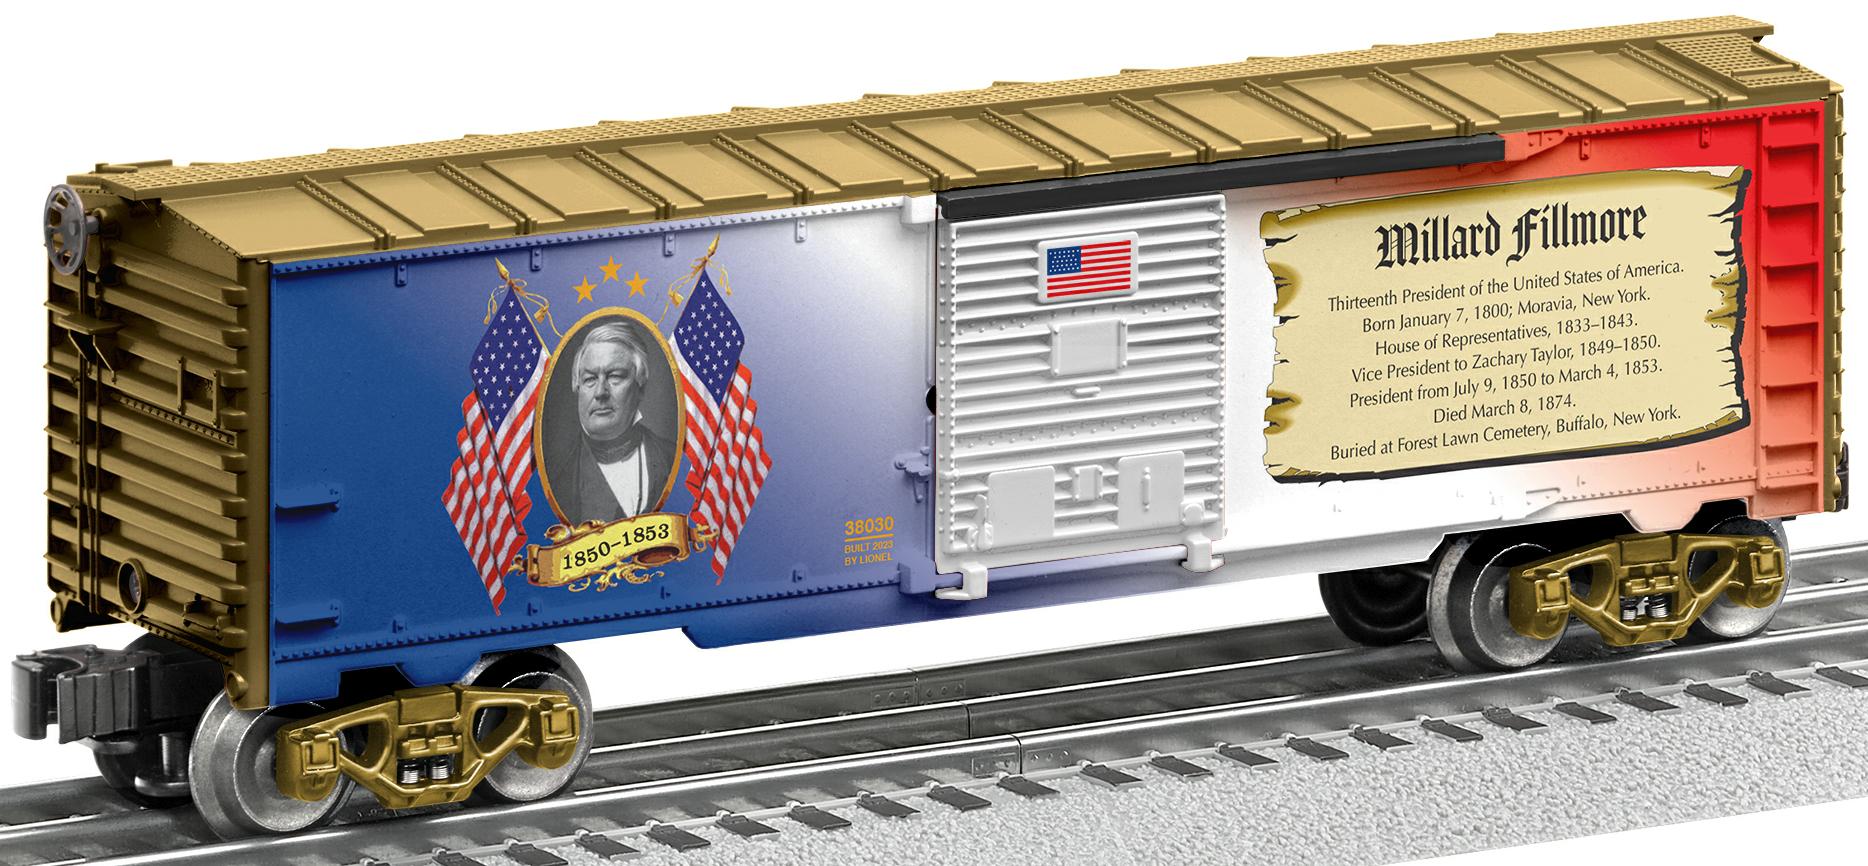 Millard Fillmore boxcar image